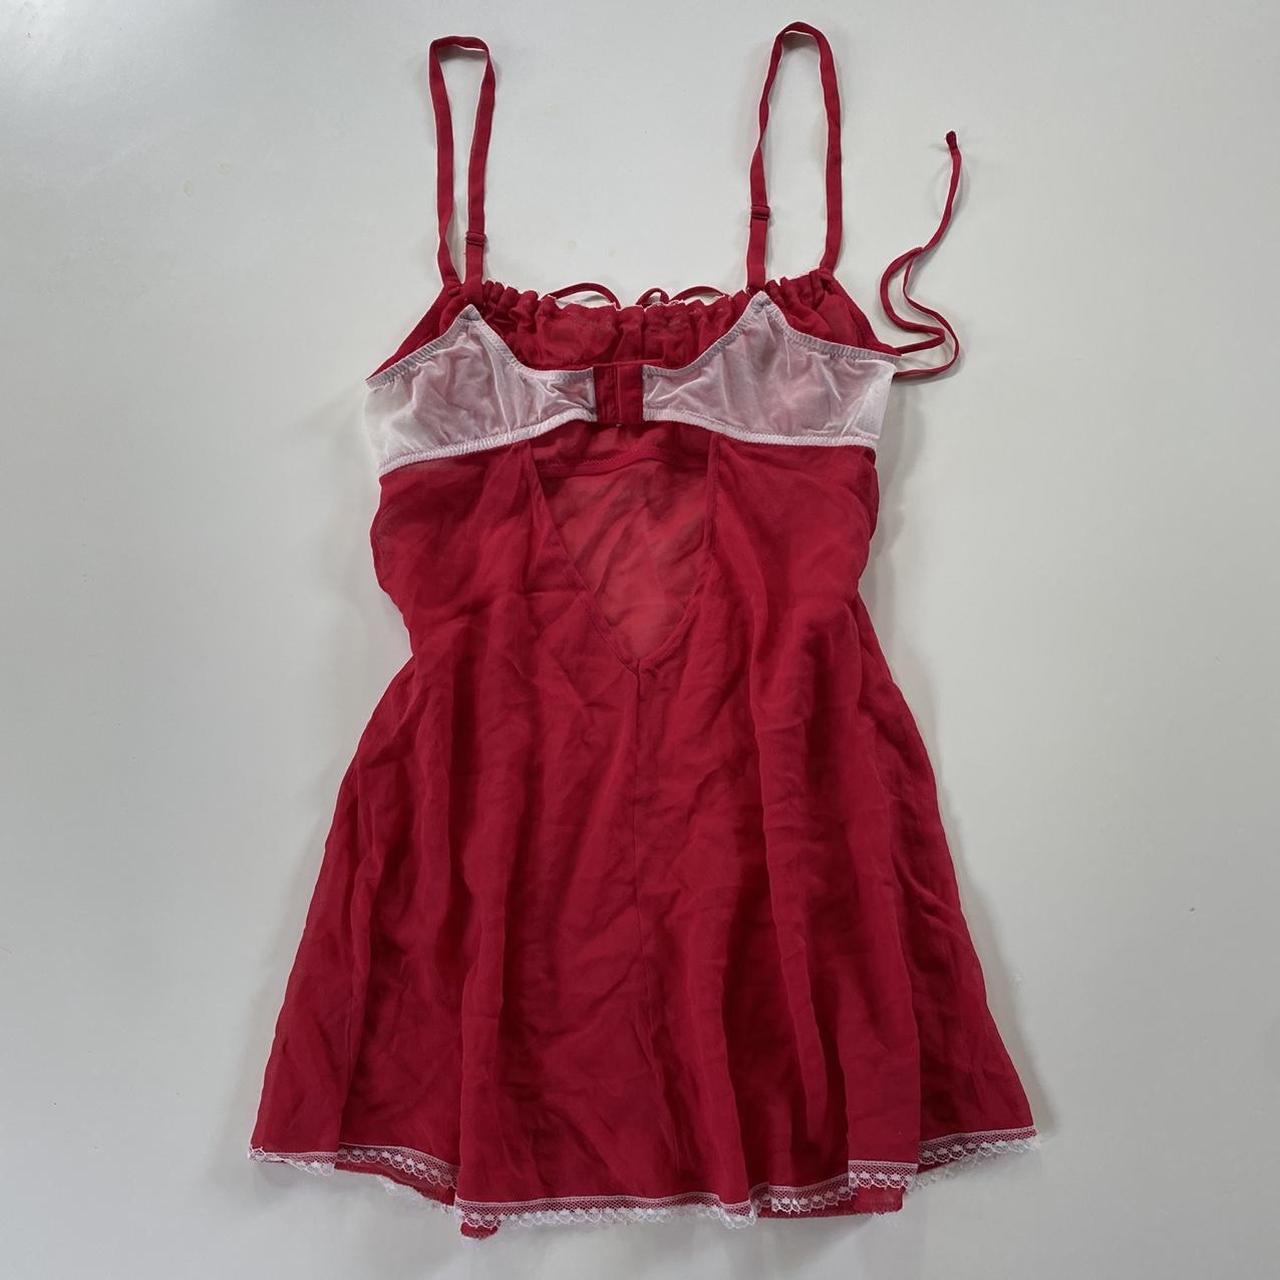 Victoria’s Secret red milkmaid lingerie dress / slip... - Depop